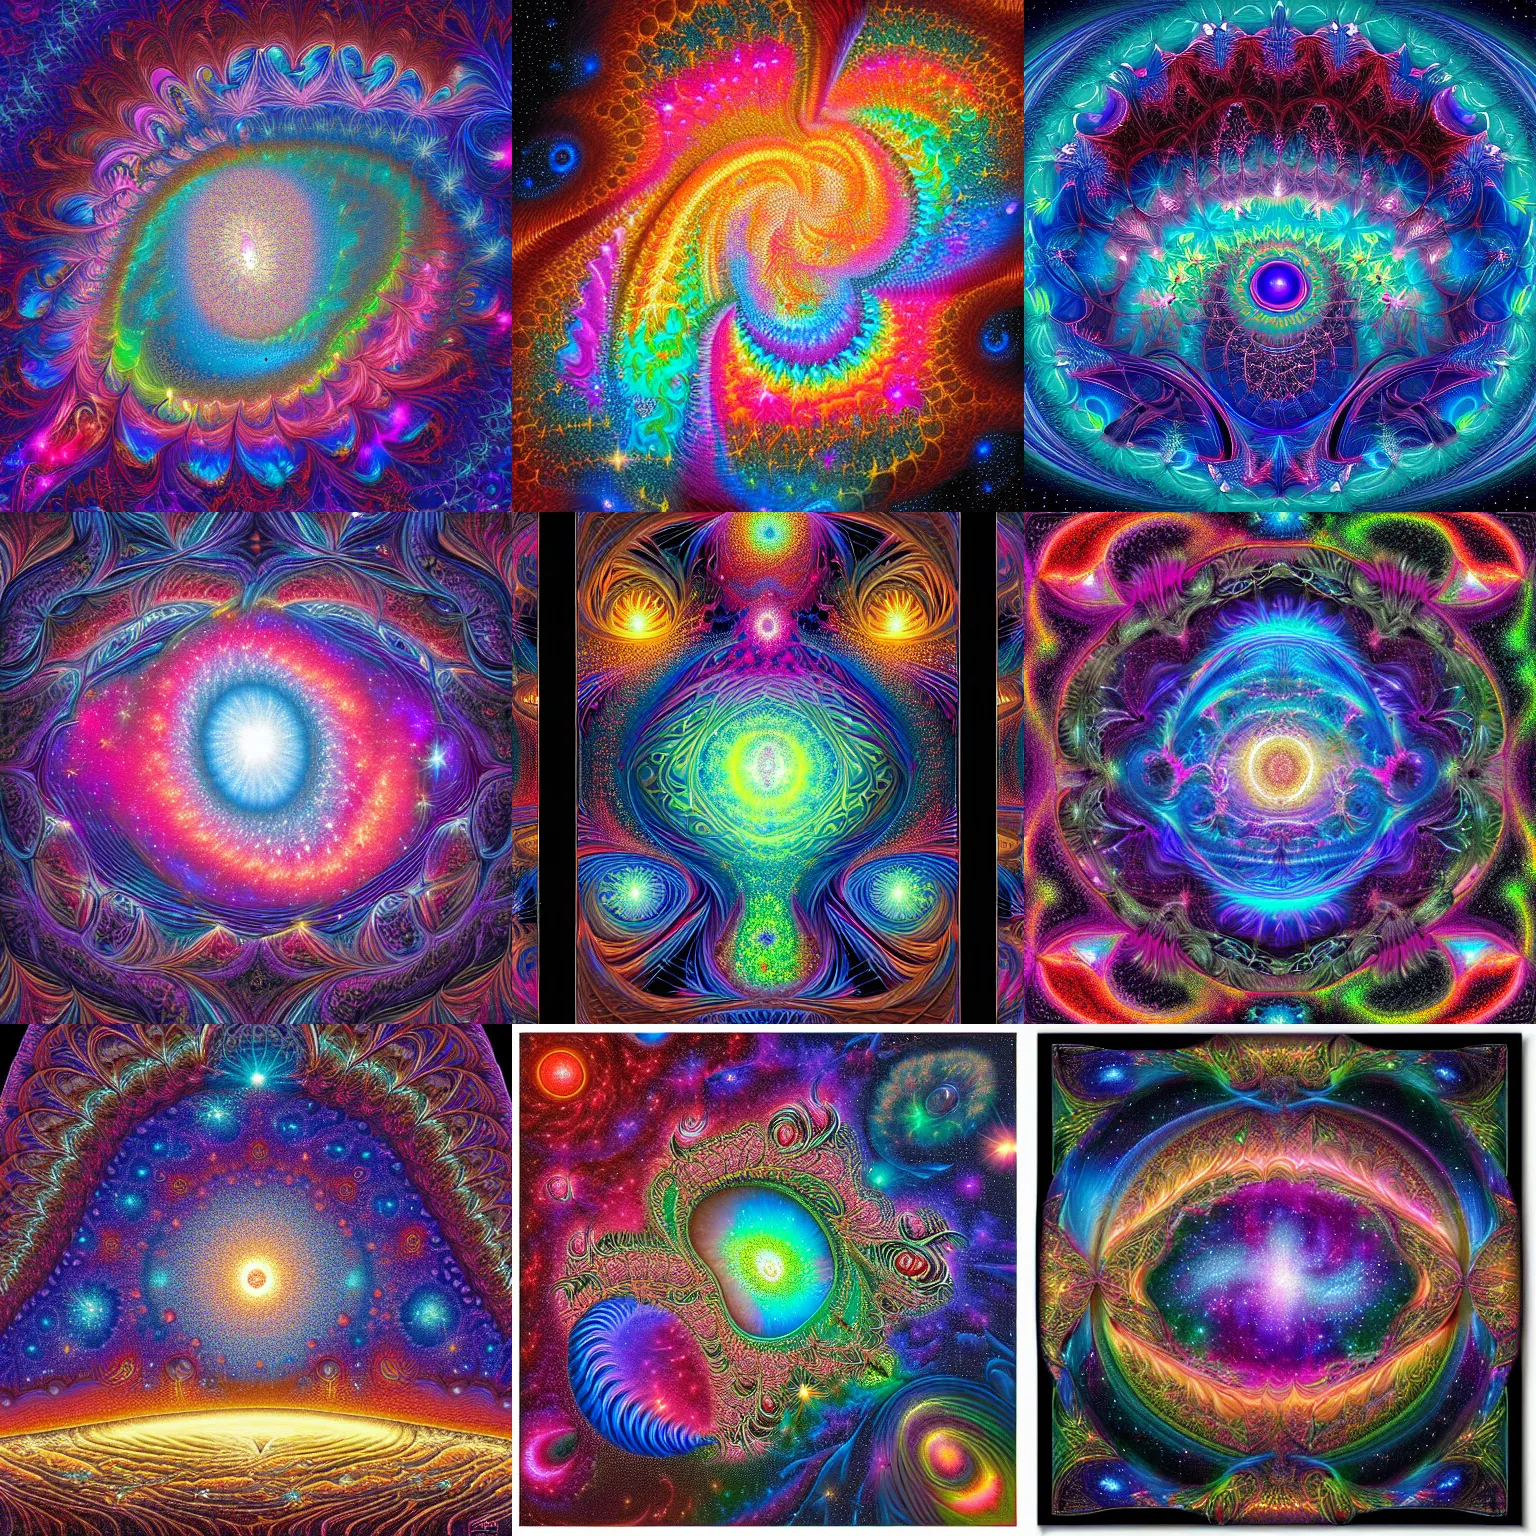 Prompt: a beautiful intricate cosmic fractal galaxy by dan mumford and alex grey hd vibrant 3 d ue 4